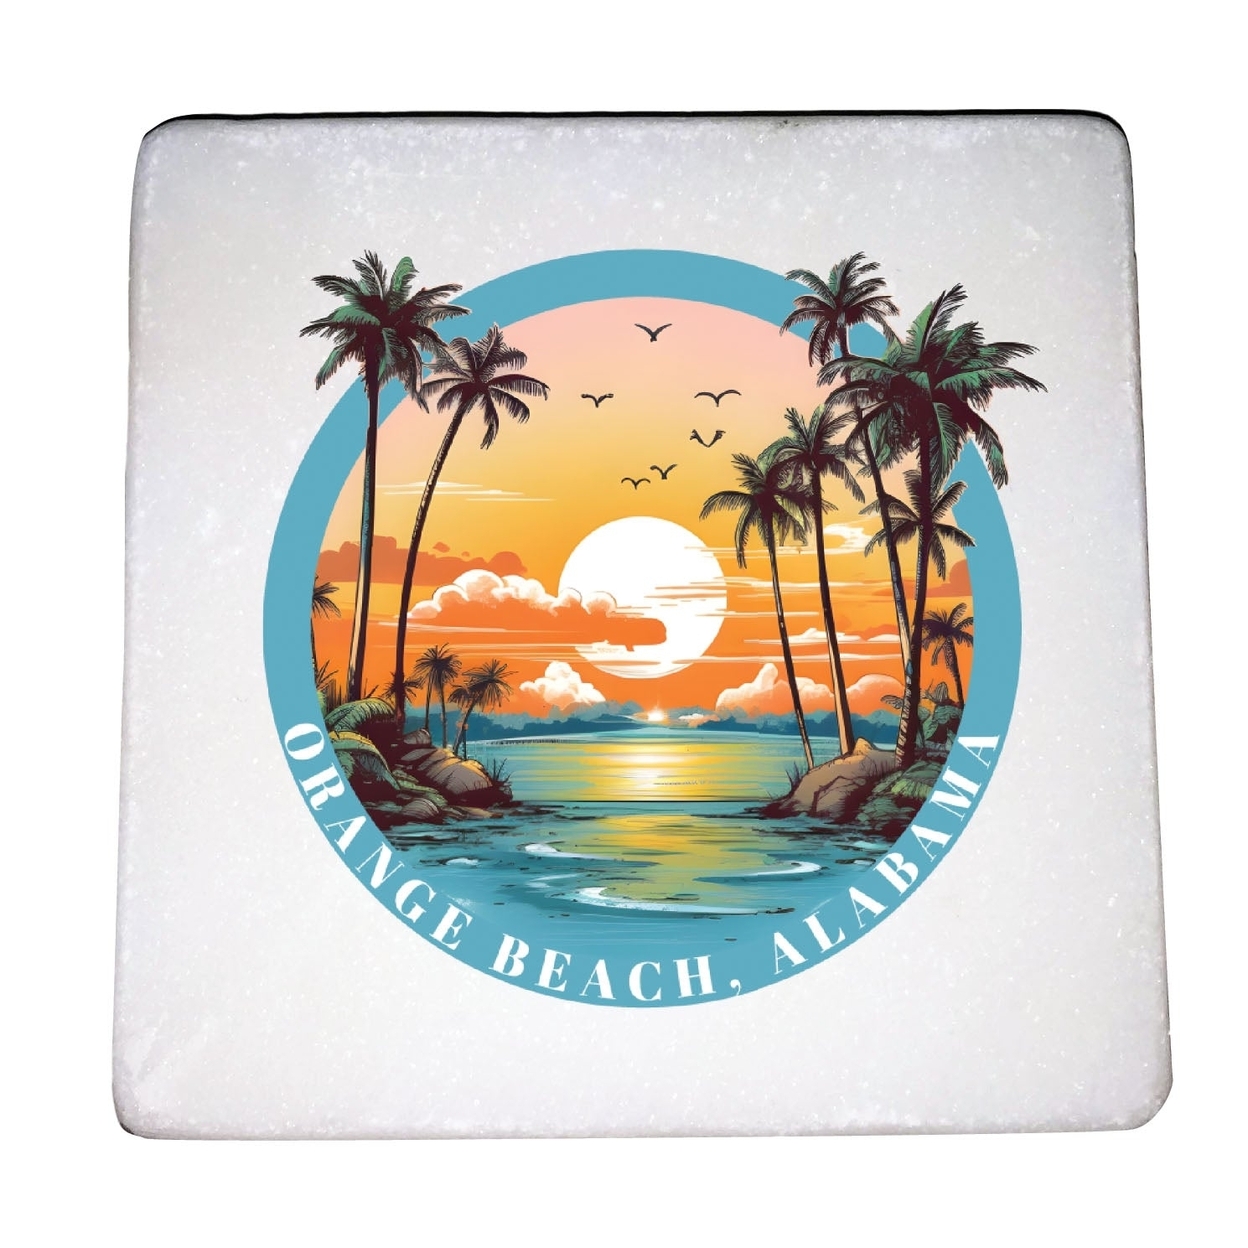 R and R Imports Orange Beach Alabama Design B Souvenir 4x4-Inch Coaster Marble 4 Pack